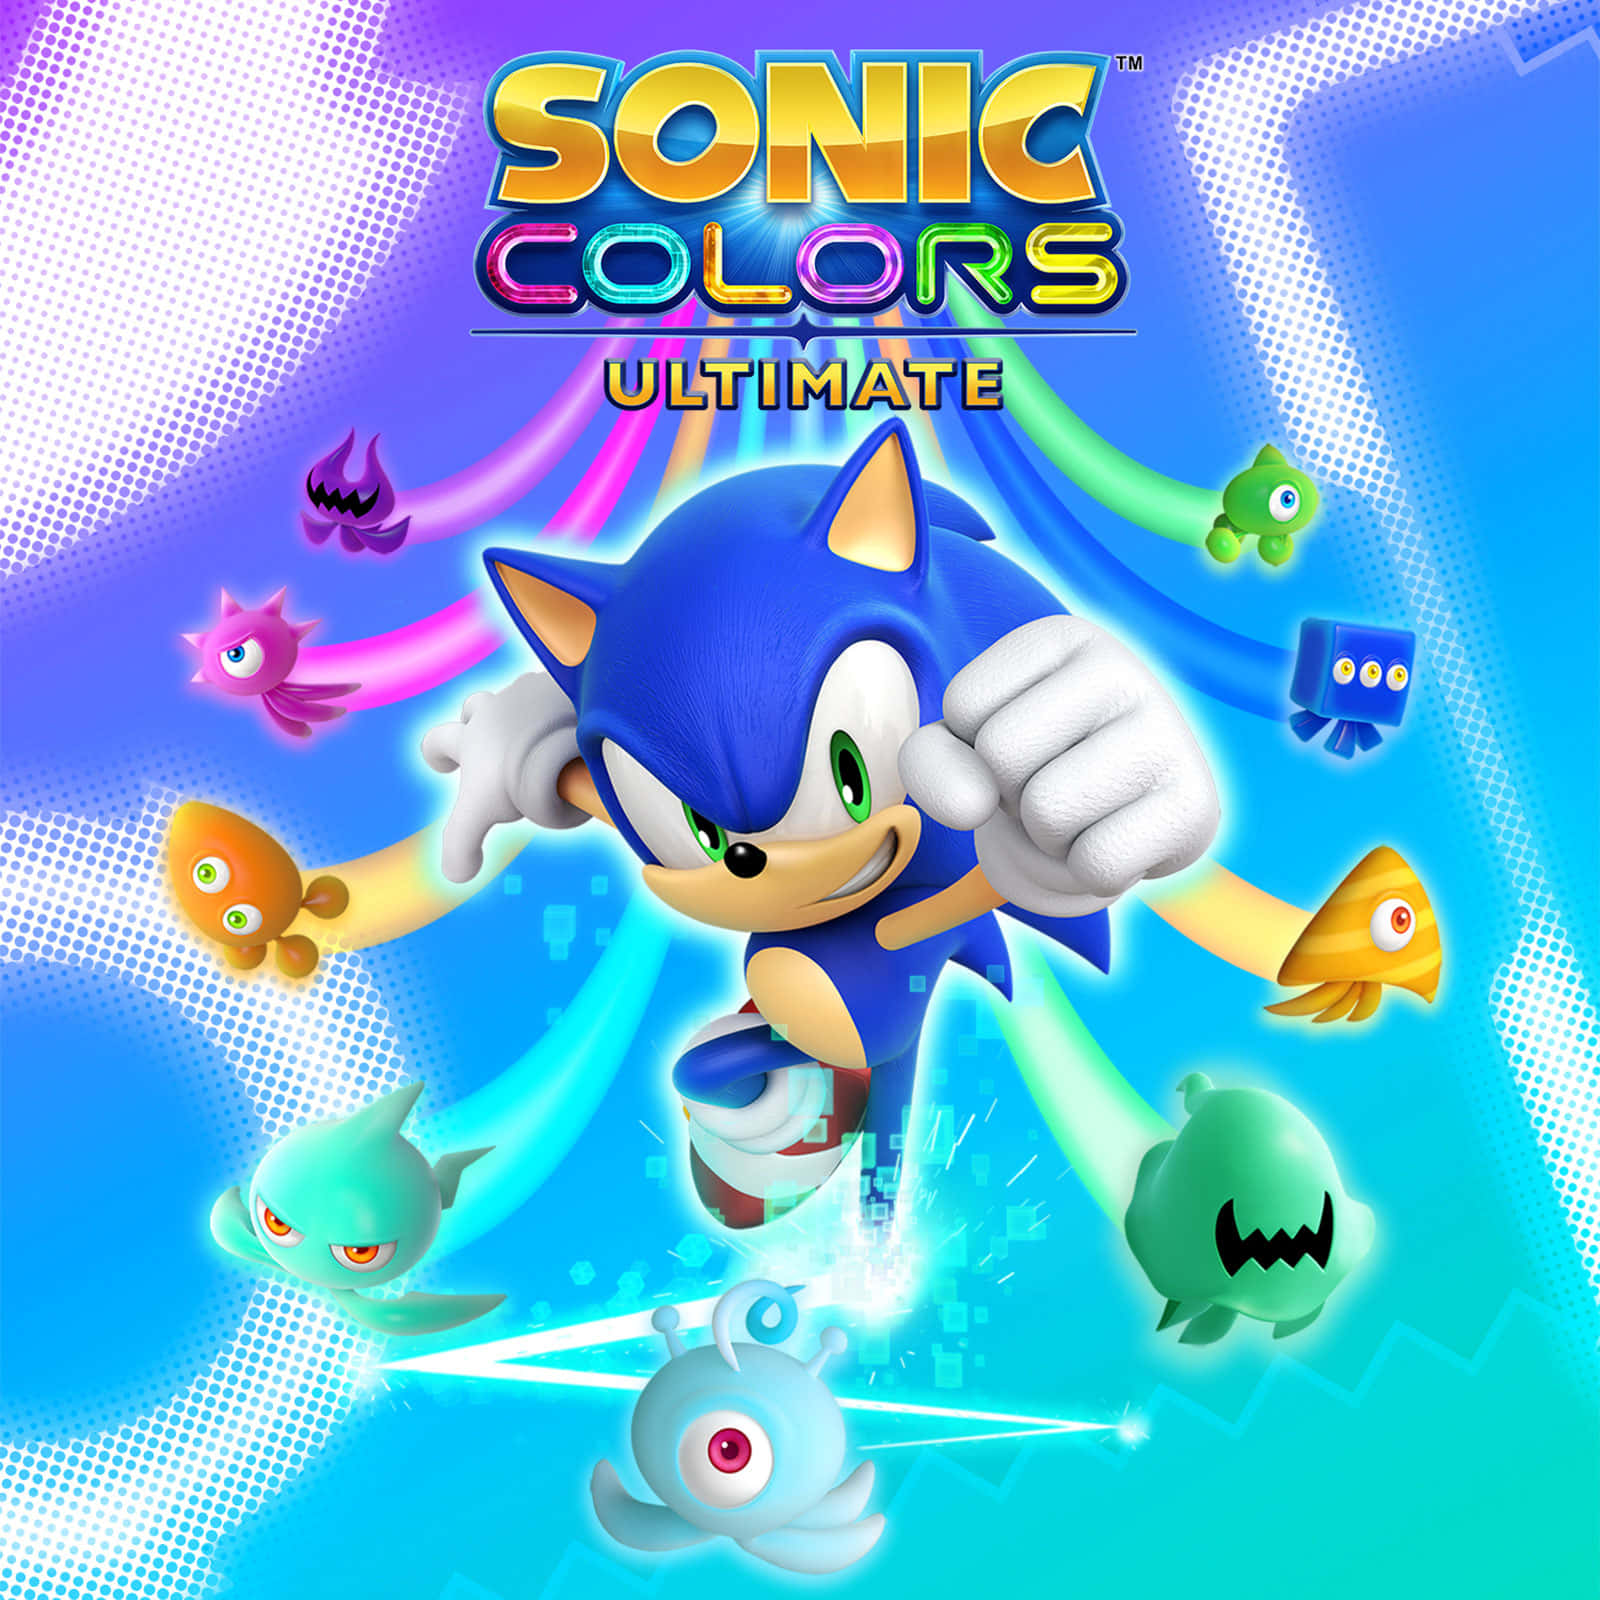 Soniccolors Ultimate 2 (italian Translation: Sonic Colors Ultimate 2)